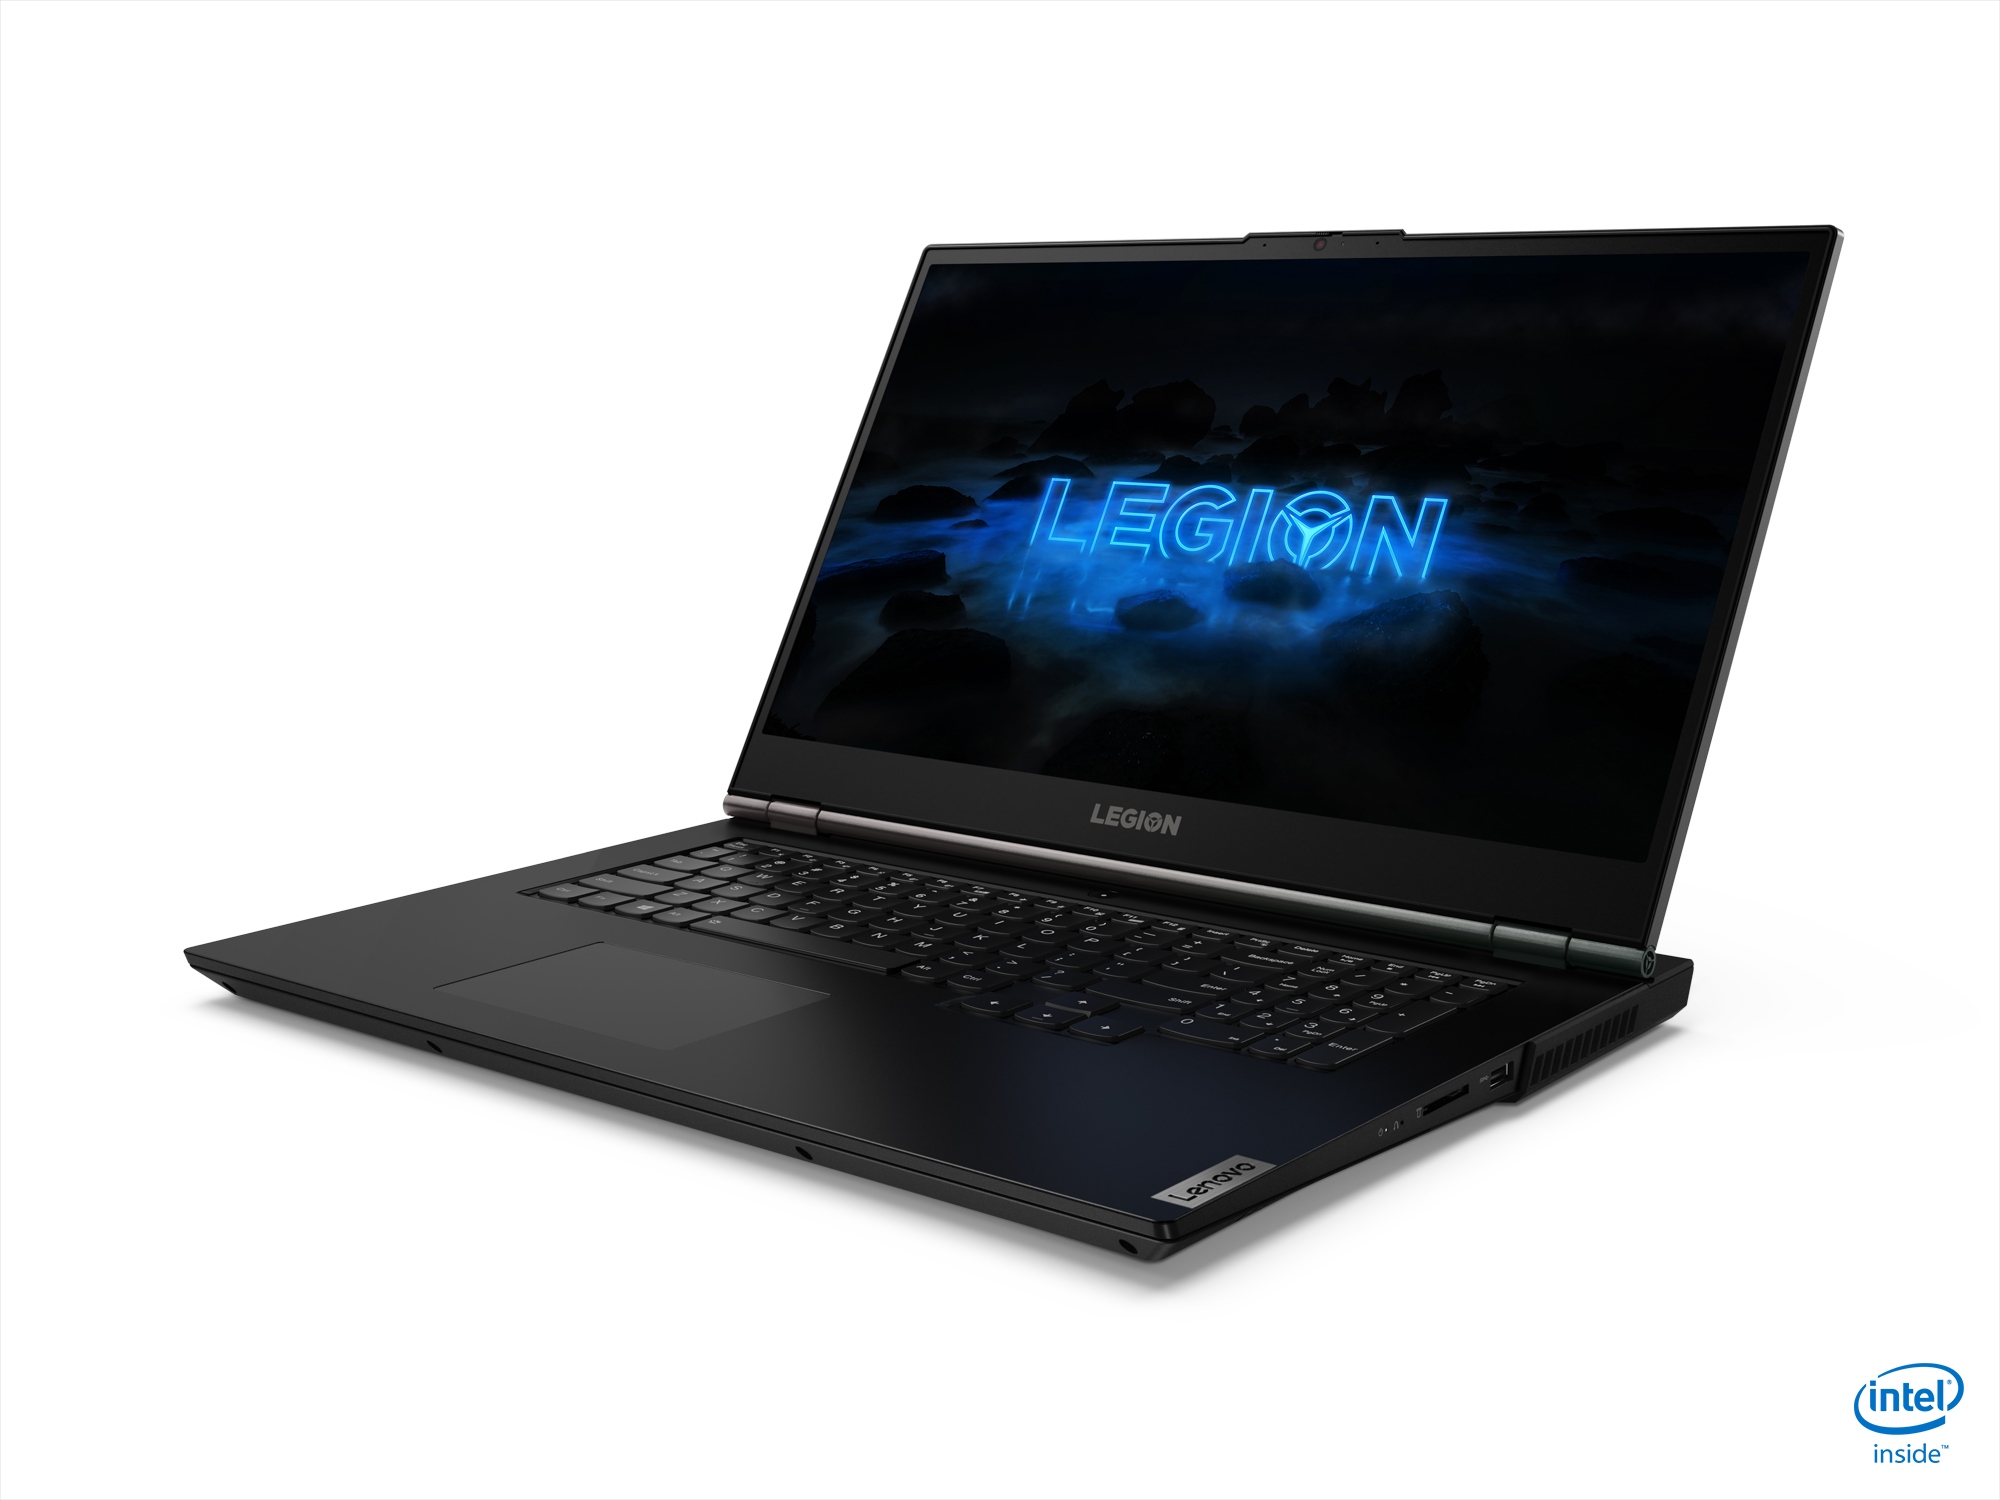 Lenovo Legion 5 Laptop, 17" FHD, Intel Core i7-10750H, 16GB RAM, 1TB HDD + 256GB SSD, NVIDIA GeForce GTX 1660Ti, Phantom Black, Windows 10, 81Y80057US - image 1 of 4